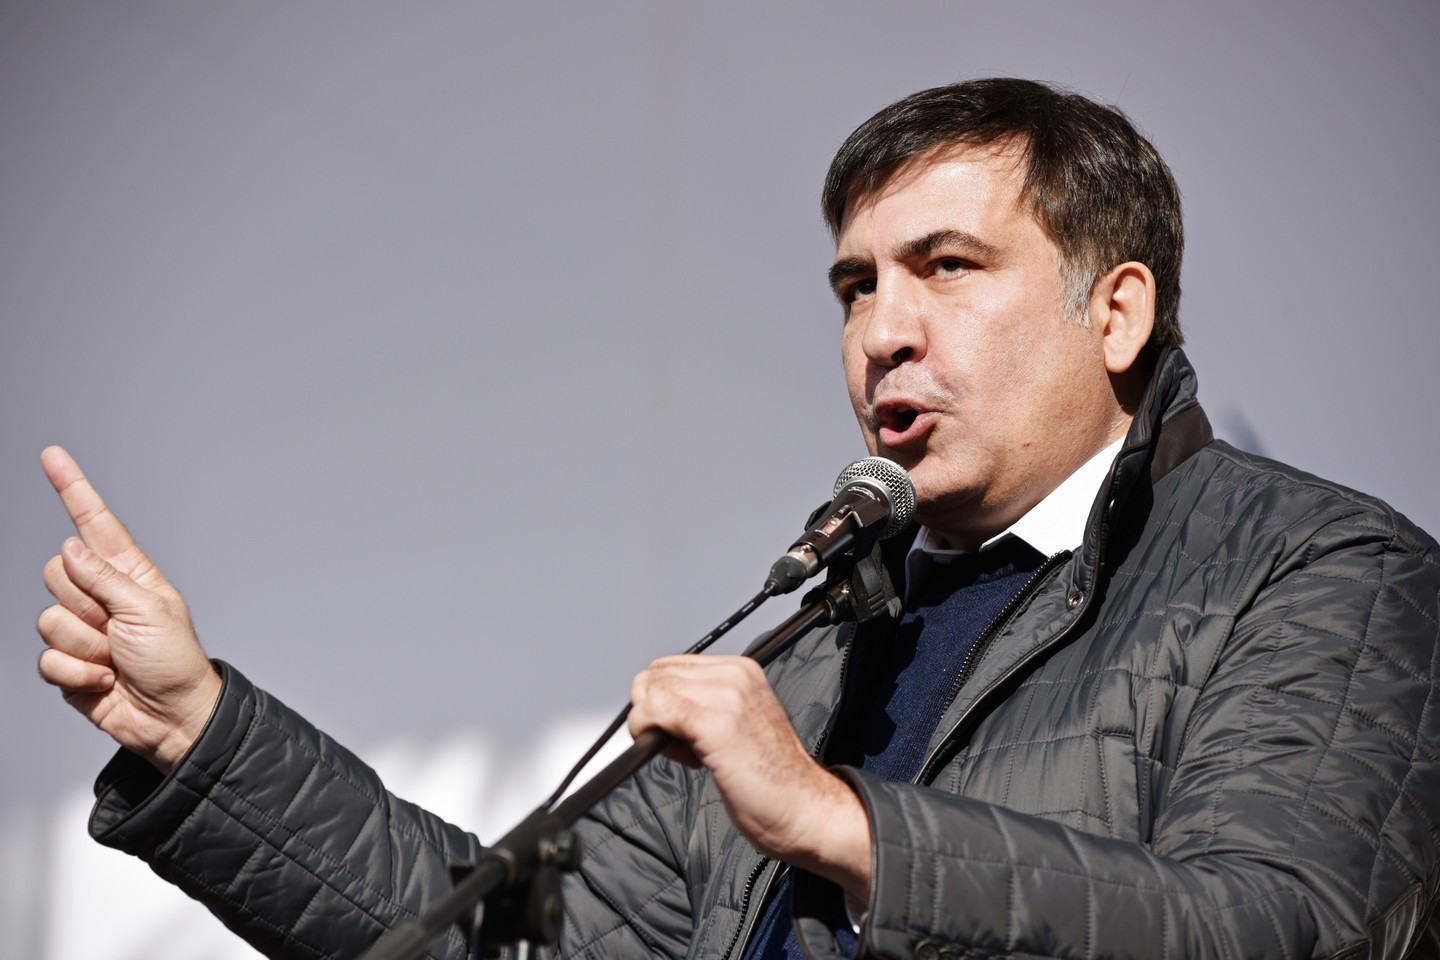 <p>Михаил Саакашвили. Фото: &copy;РИА Новости</p>
<div>
<div></div>
</div>